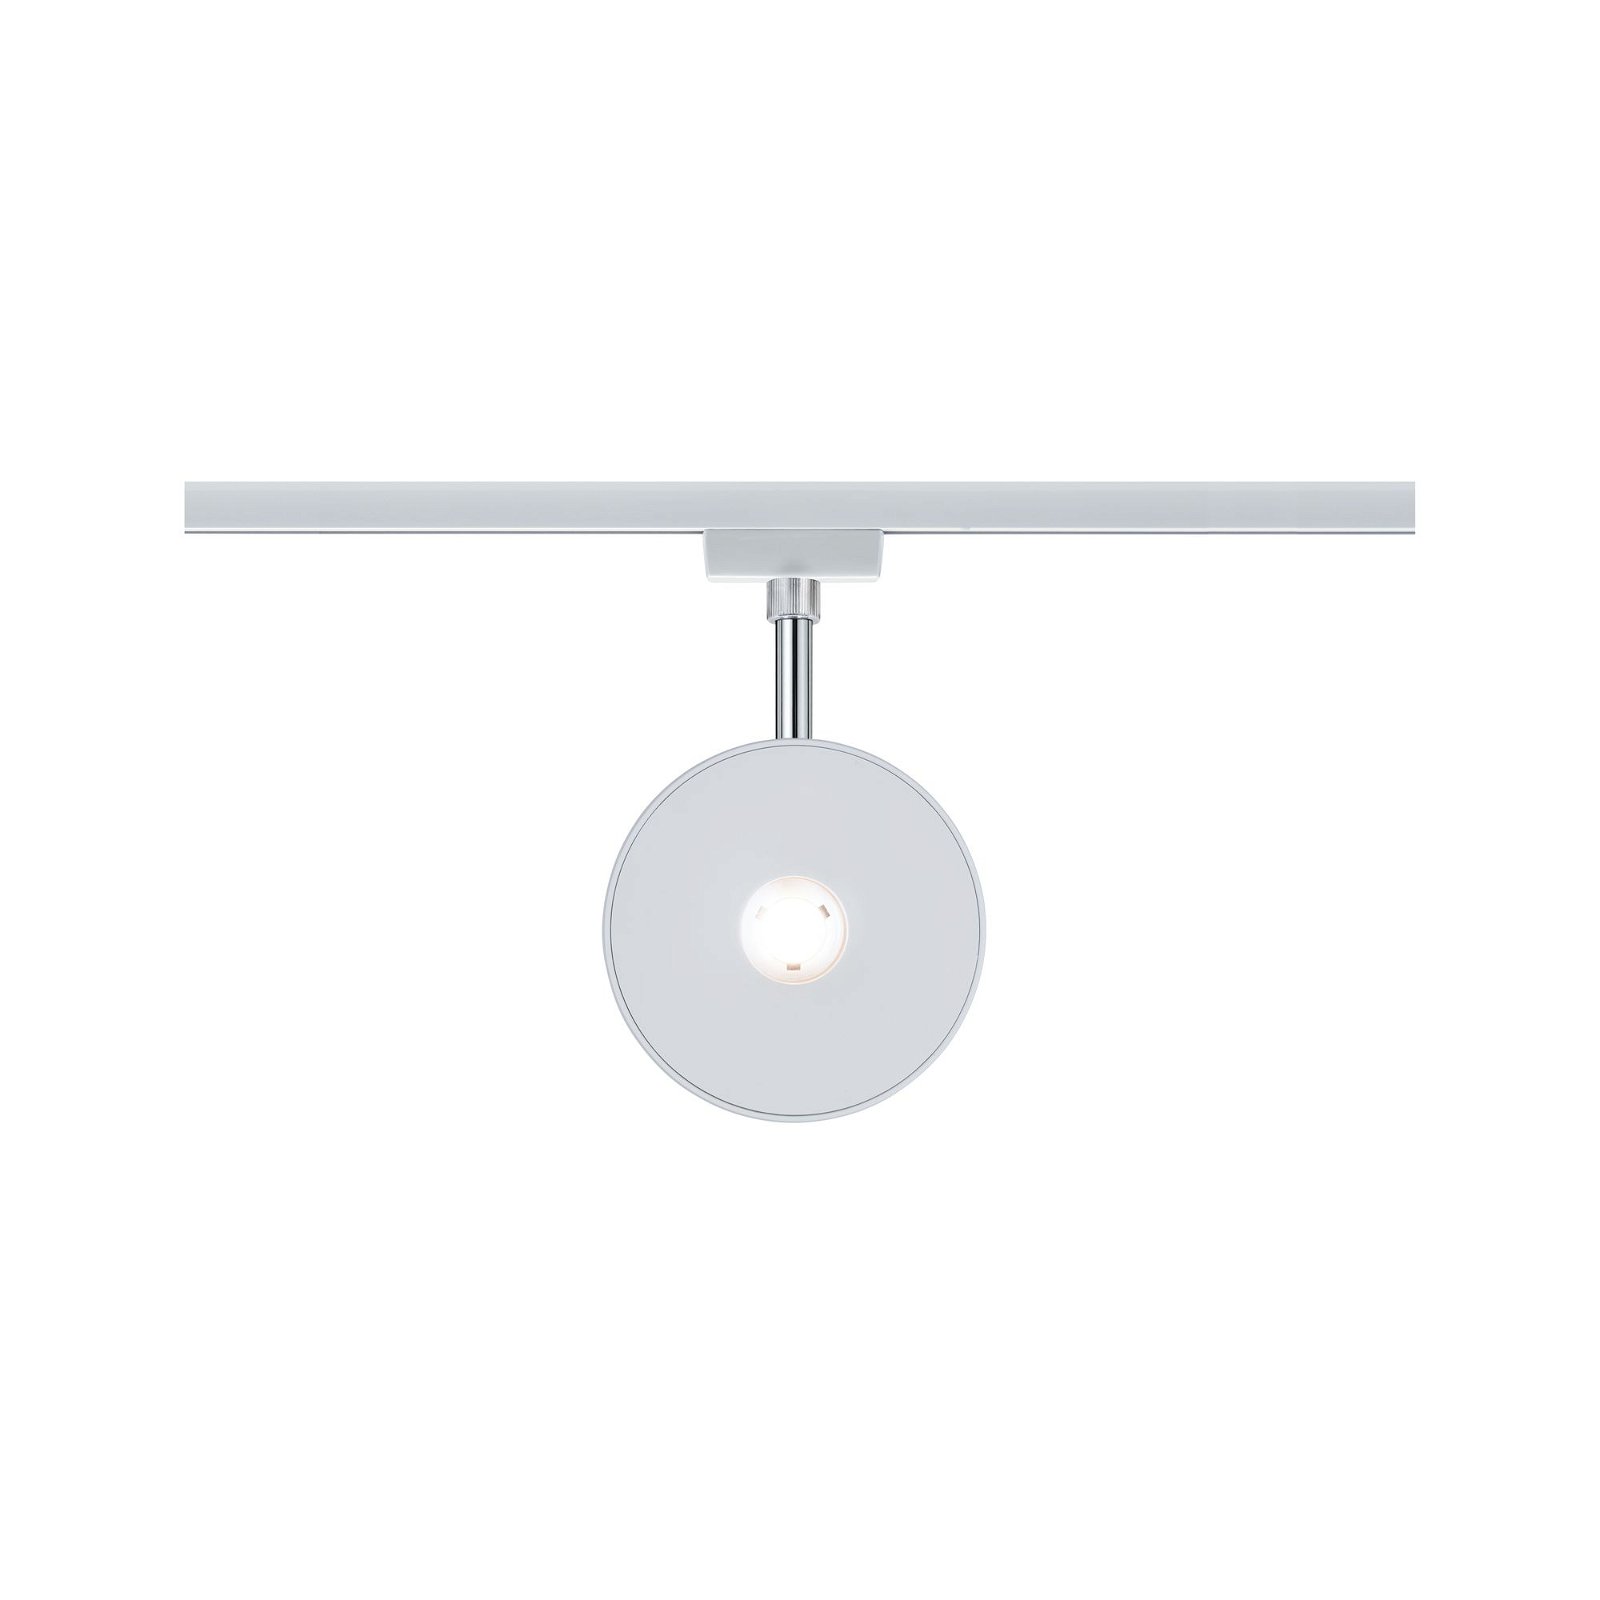 URail LED Rail spot Sphere Individual Spot 493lm 7W 2700K dimmable 230V White/Chrome